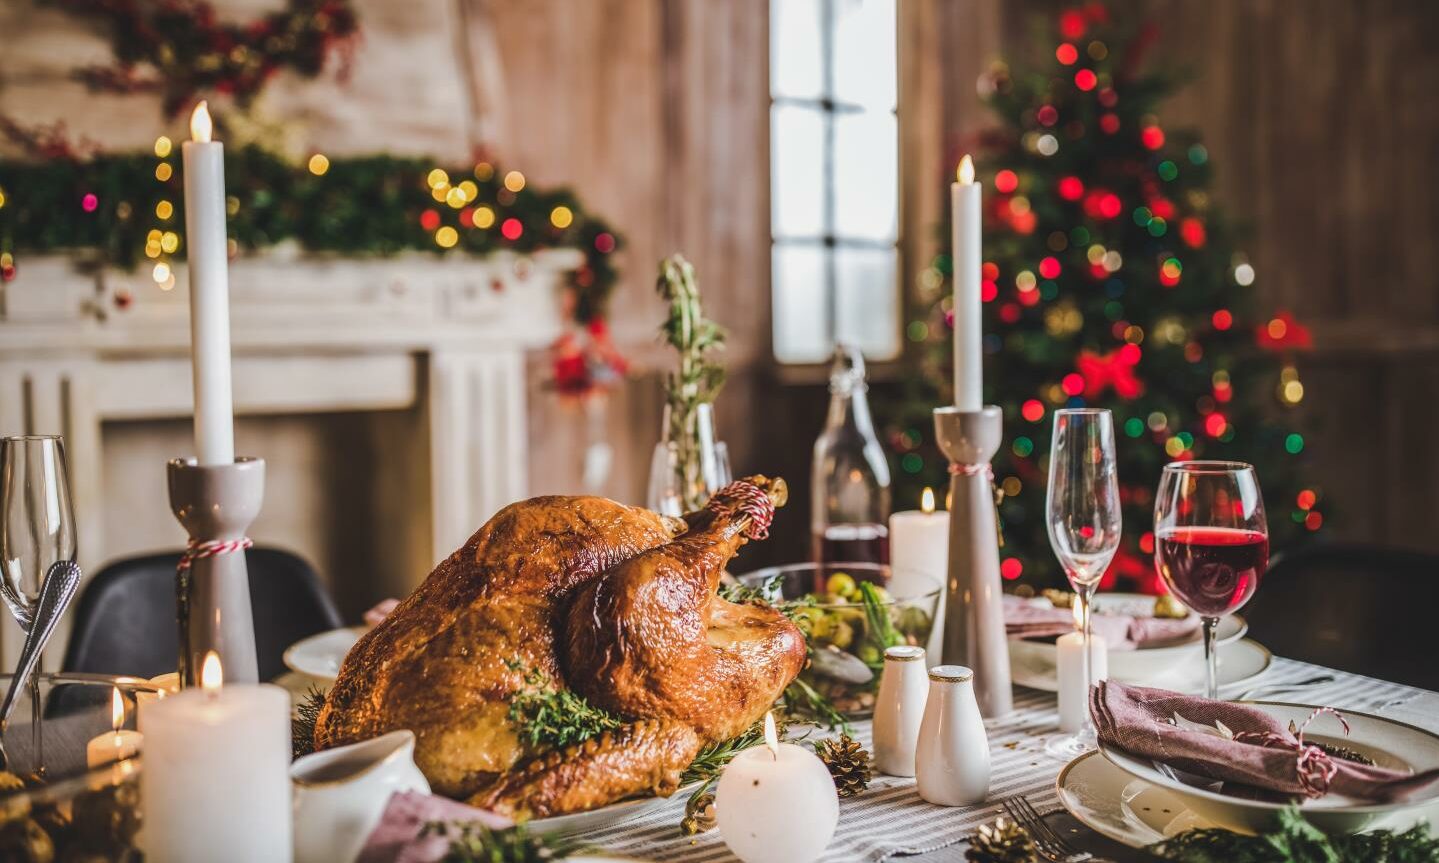 Iain has an interesting Christmas dinner recipe to share (Photo: LightField Studios/Shutterstock)